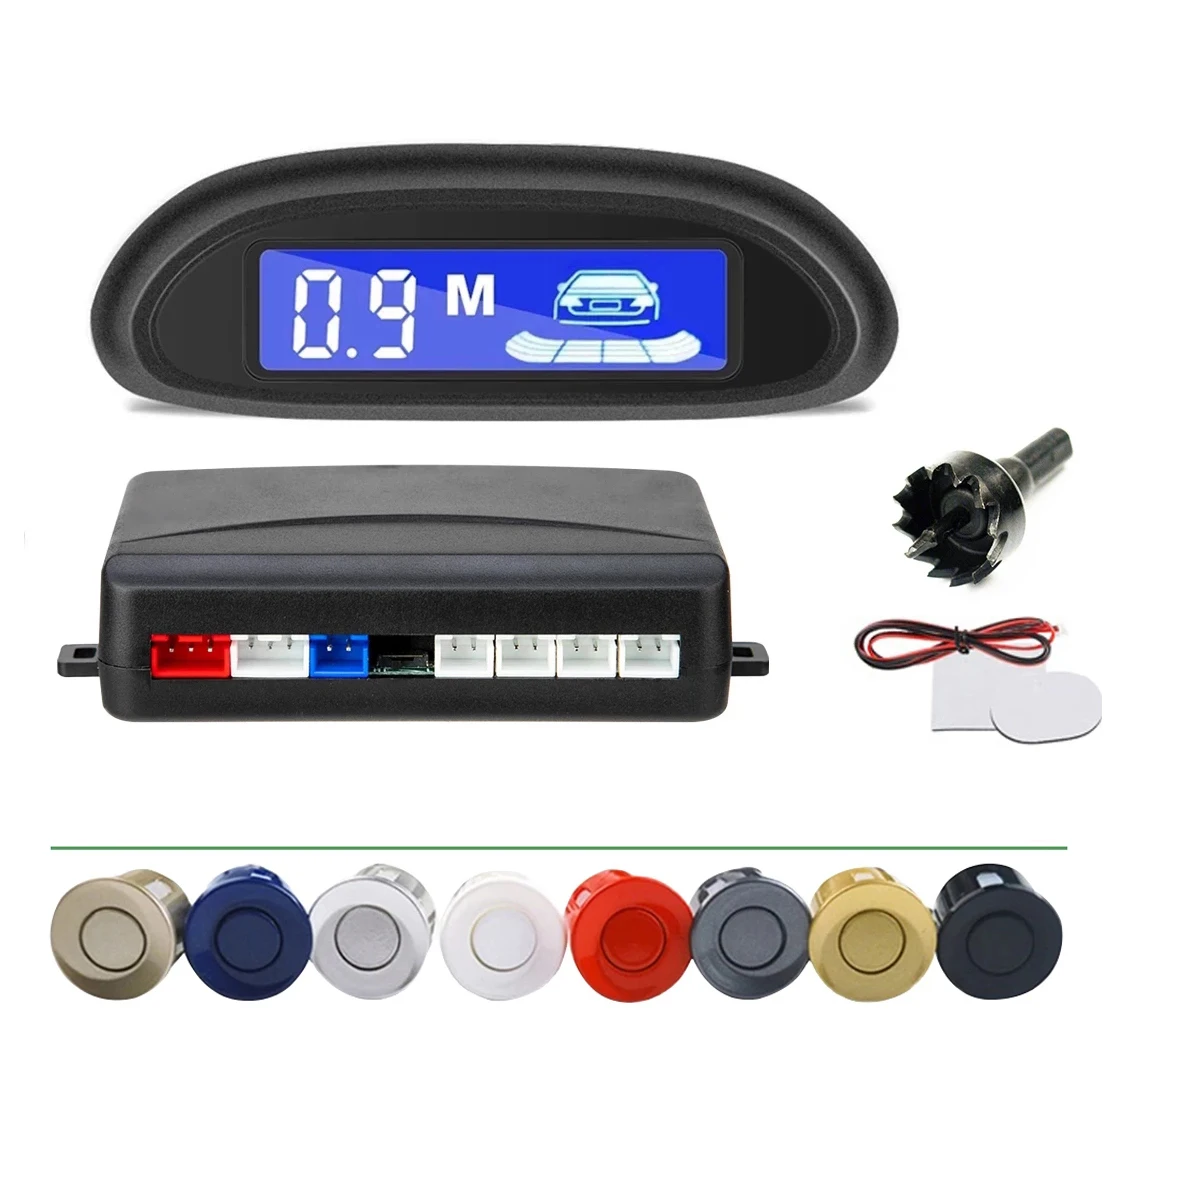 

Car LED Parking Radar Monitor With 4 Sensors Backup Auto Parktronic Reverse Detector System Backlight Display Universal